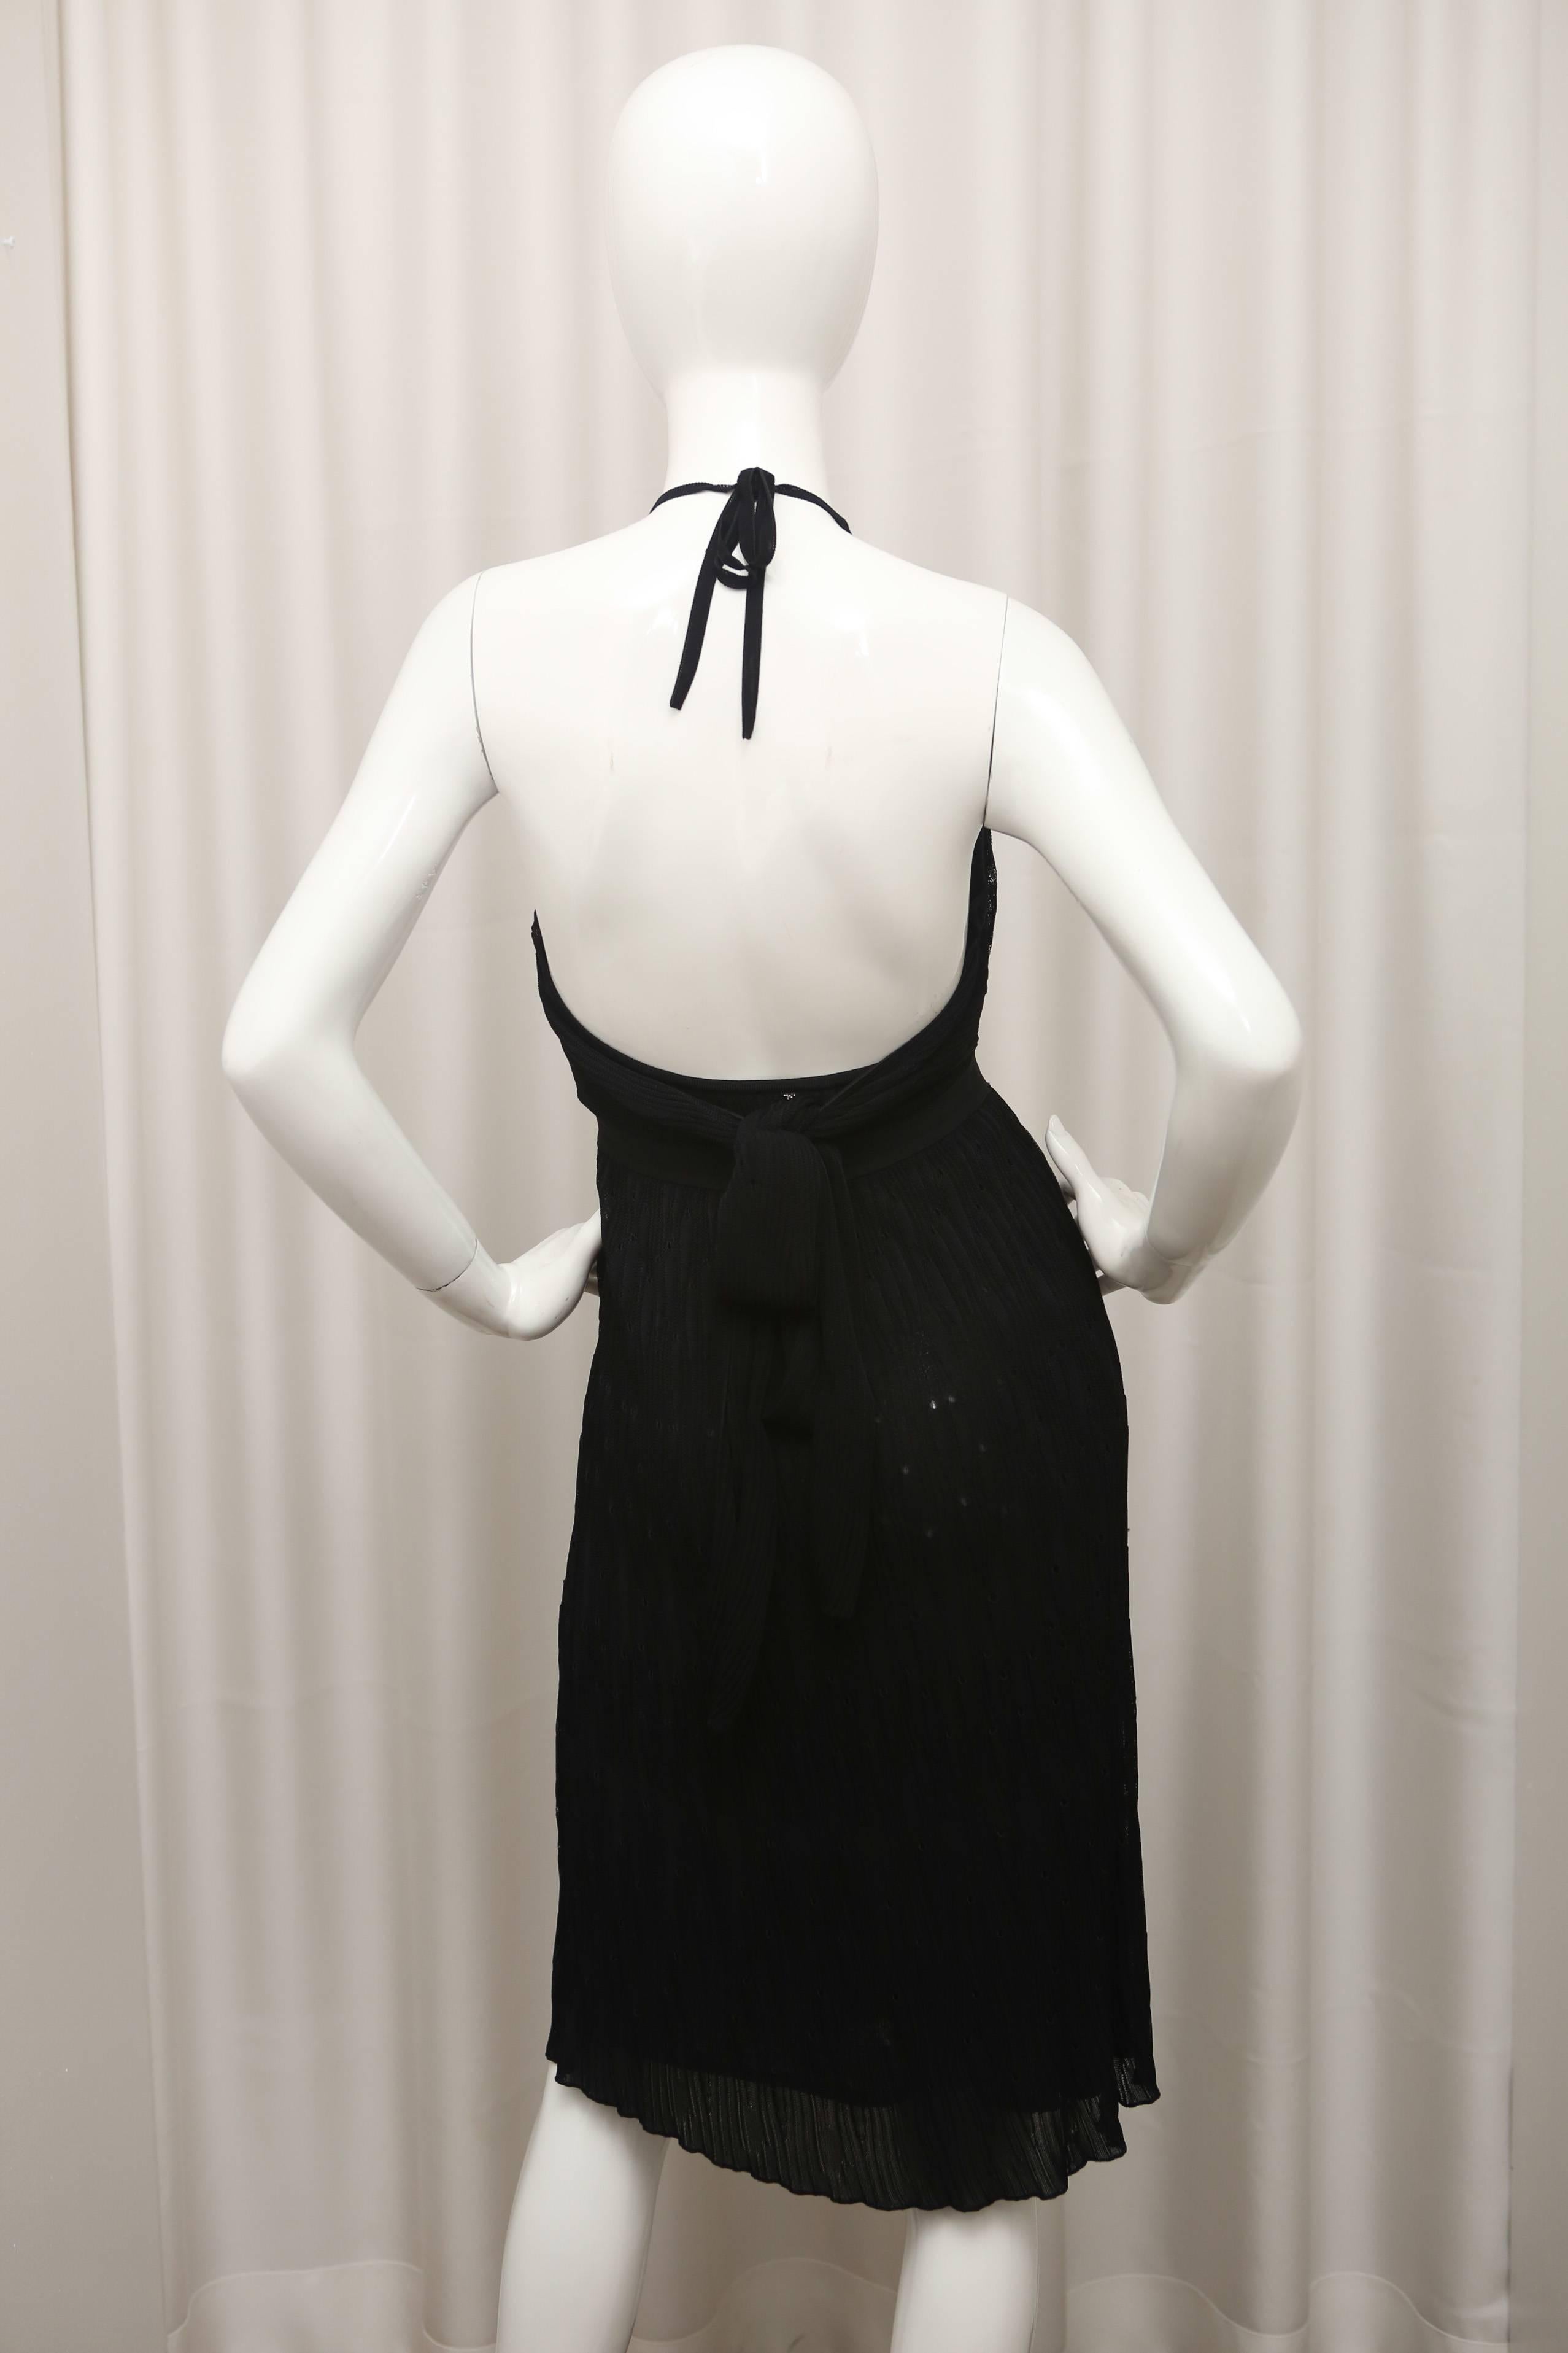 Chanel Black Halter Dress 1